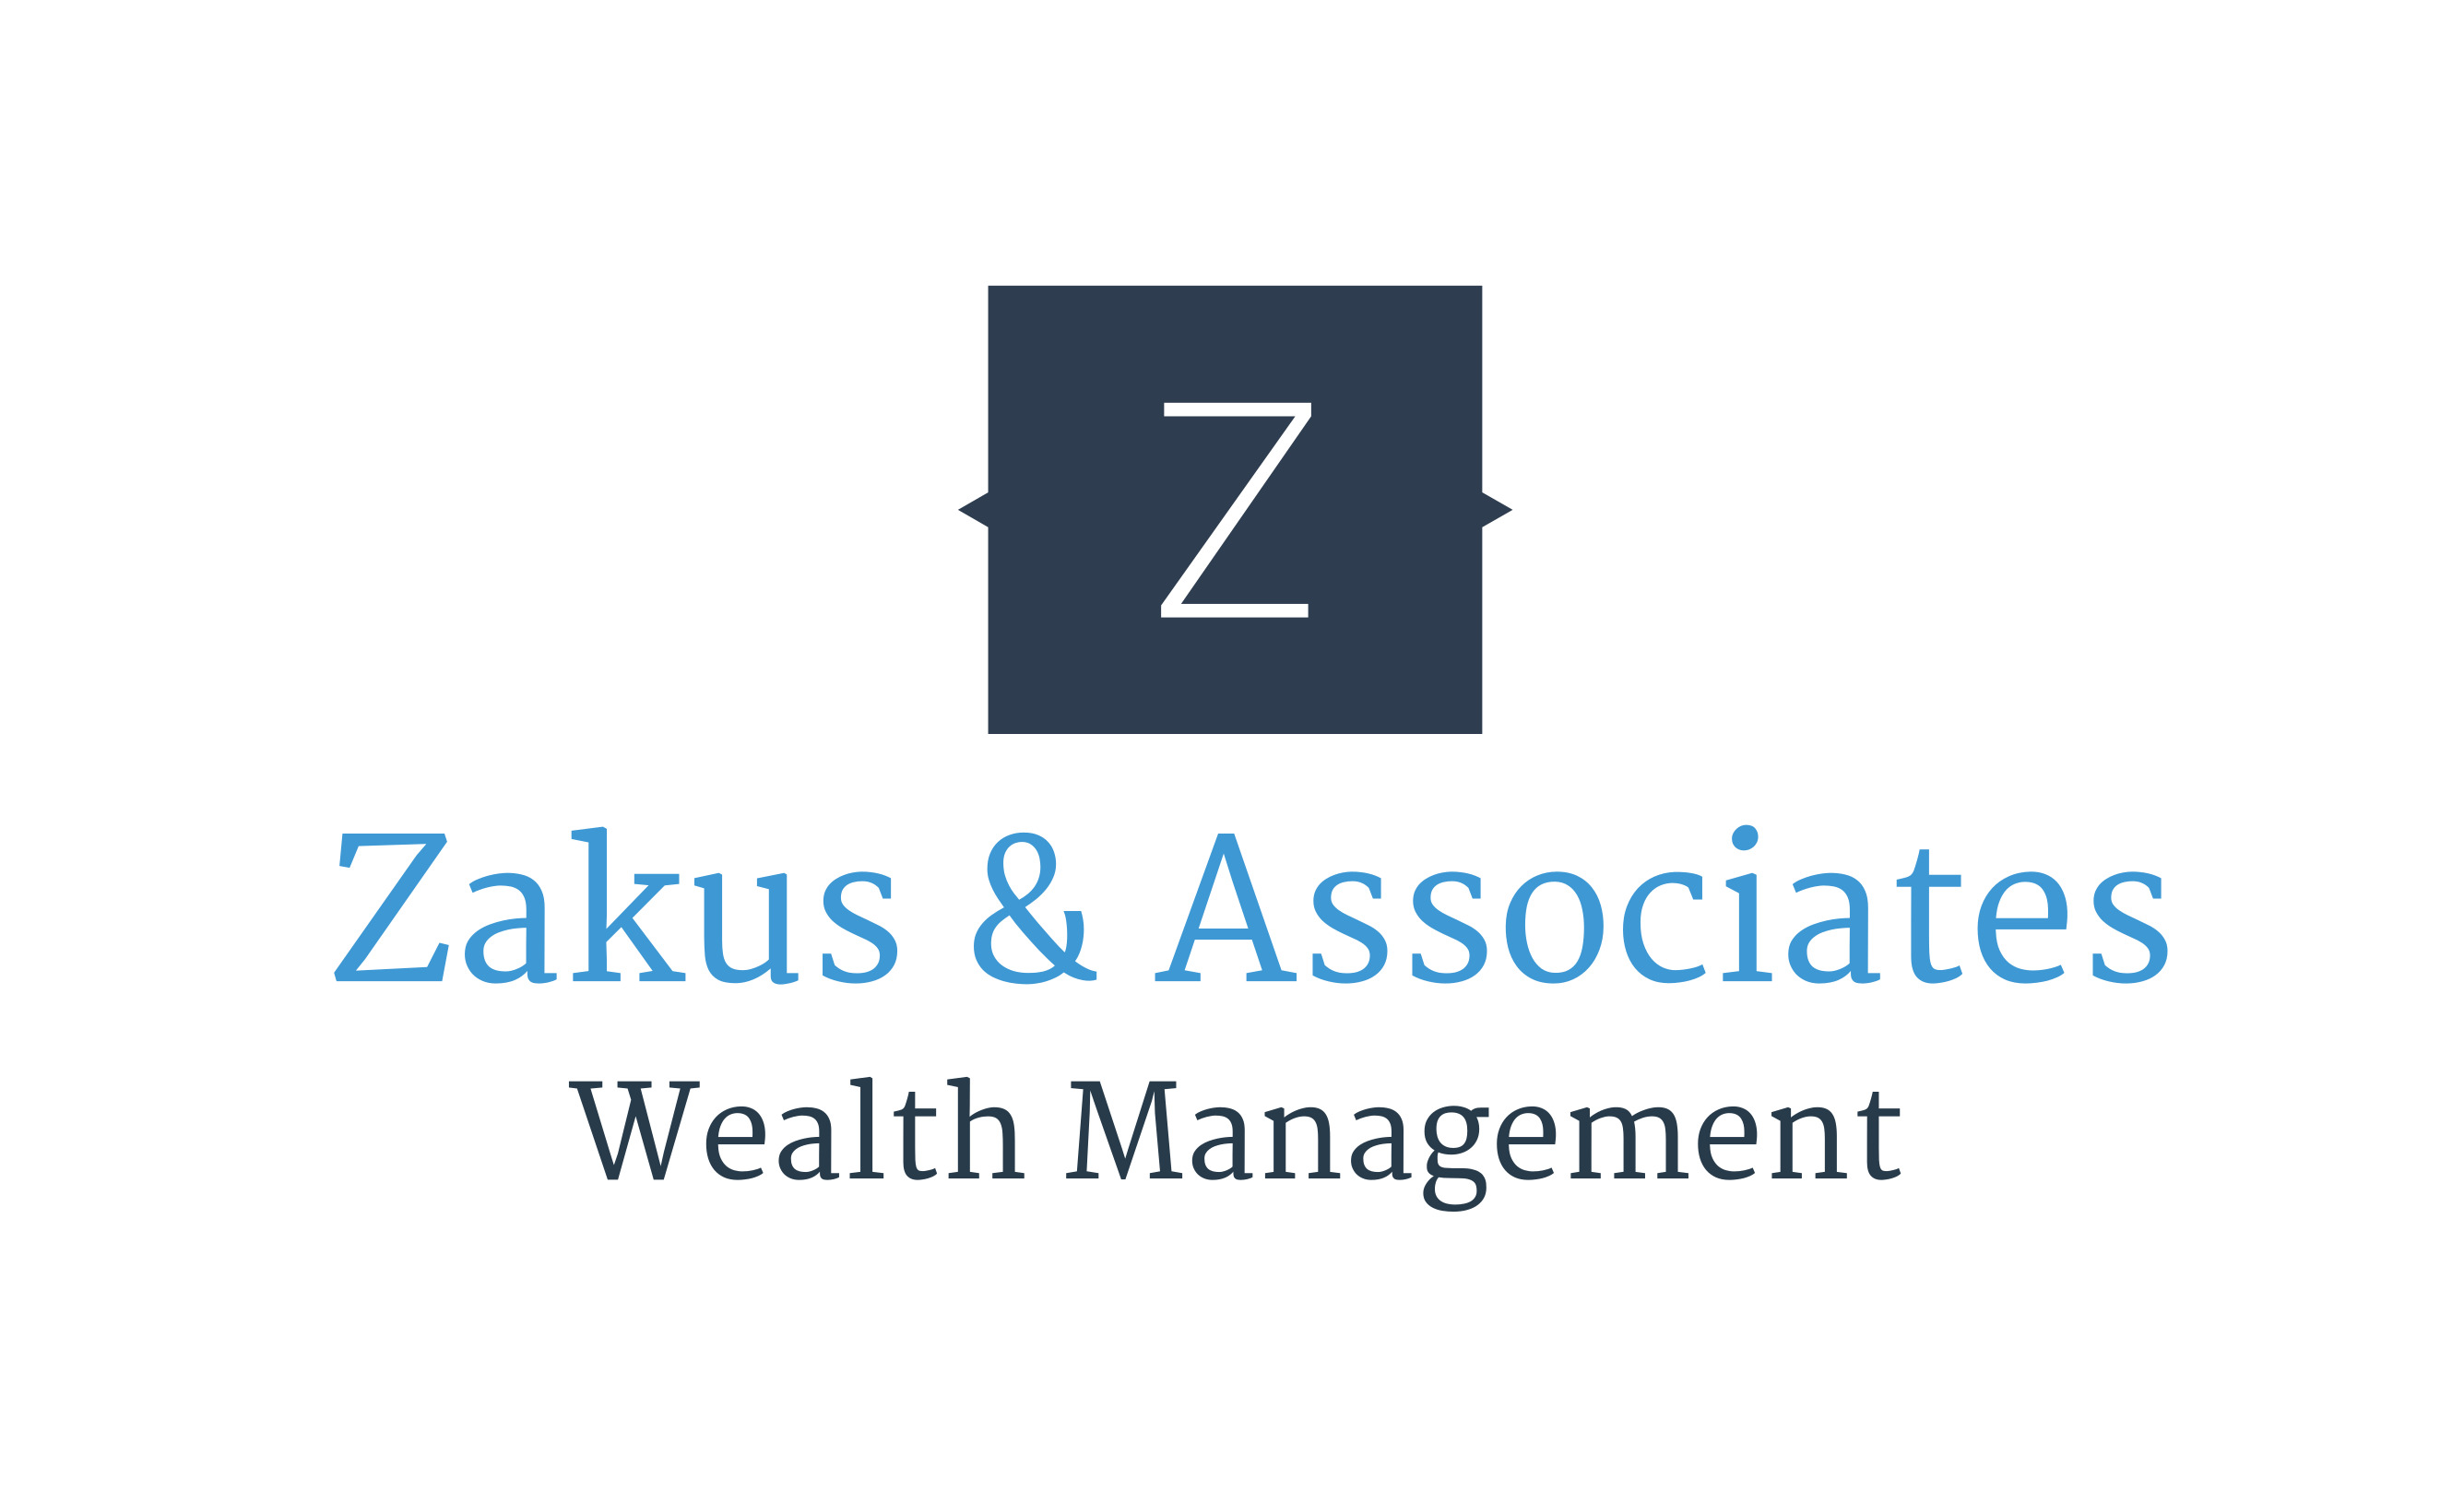 Zakus & Associates